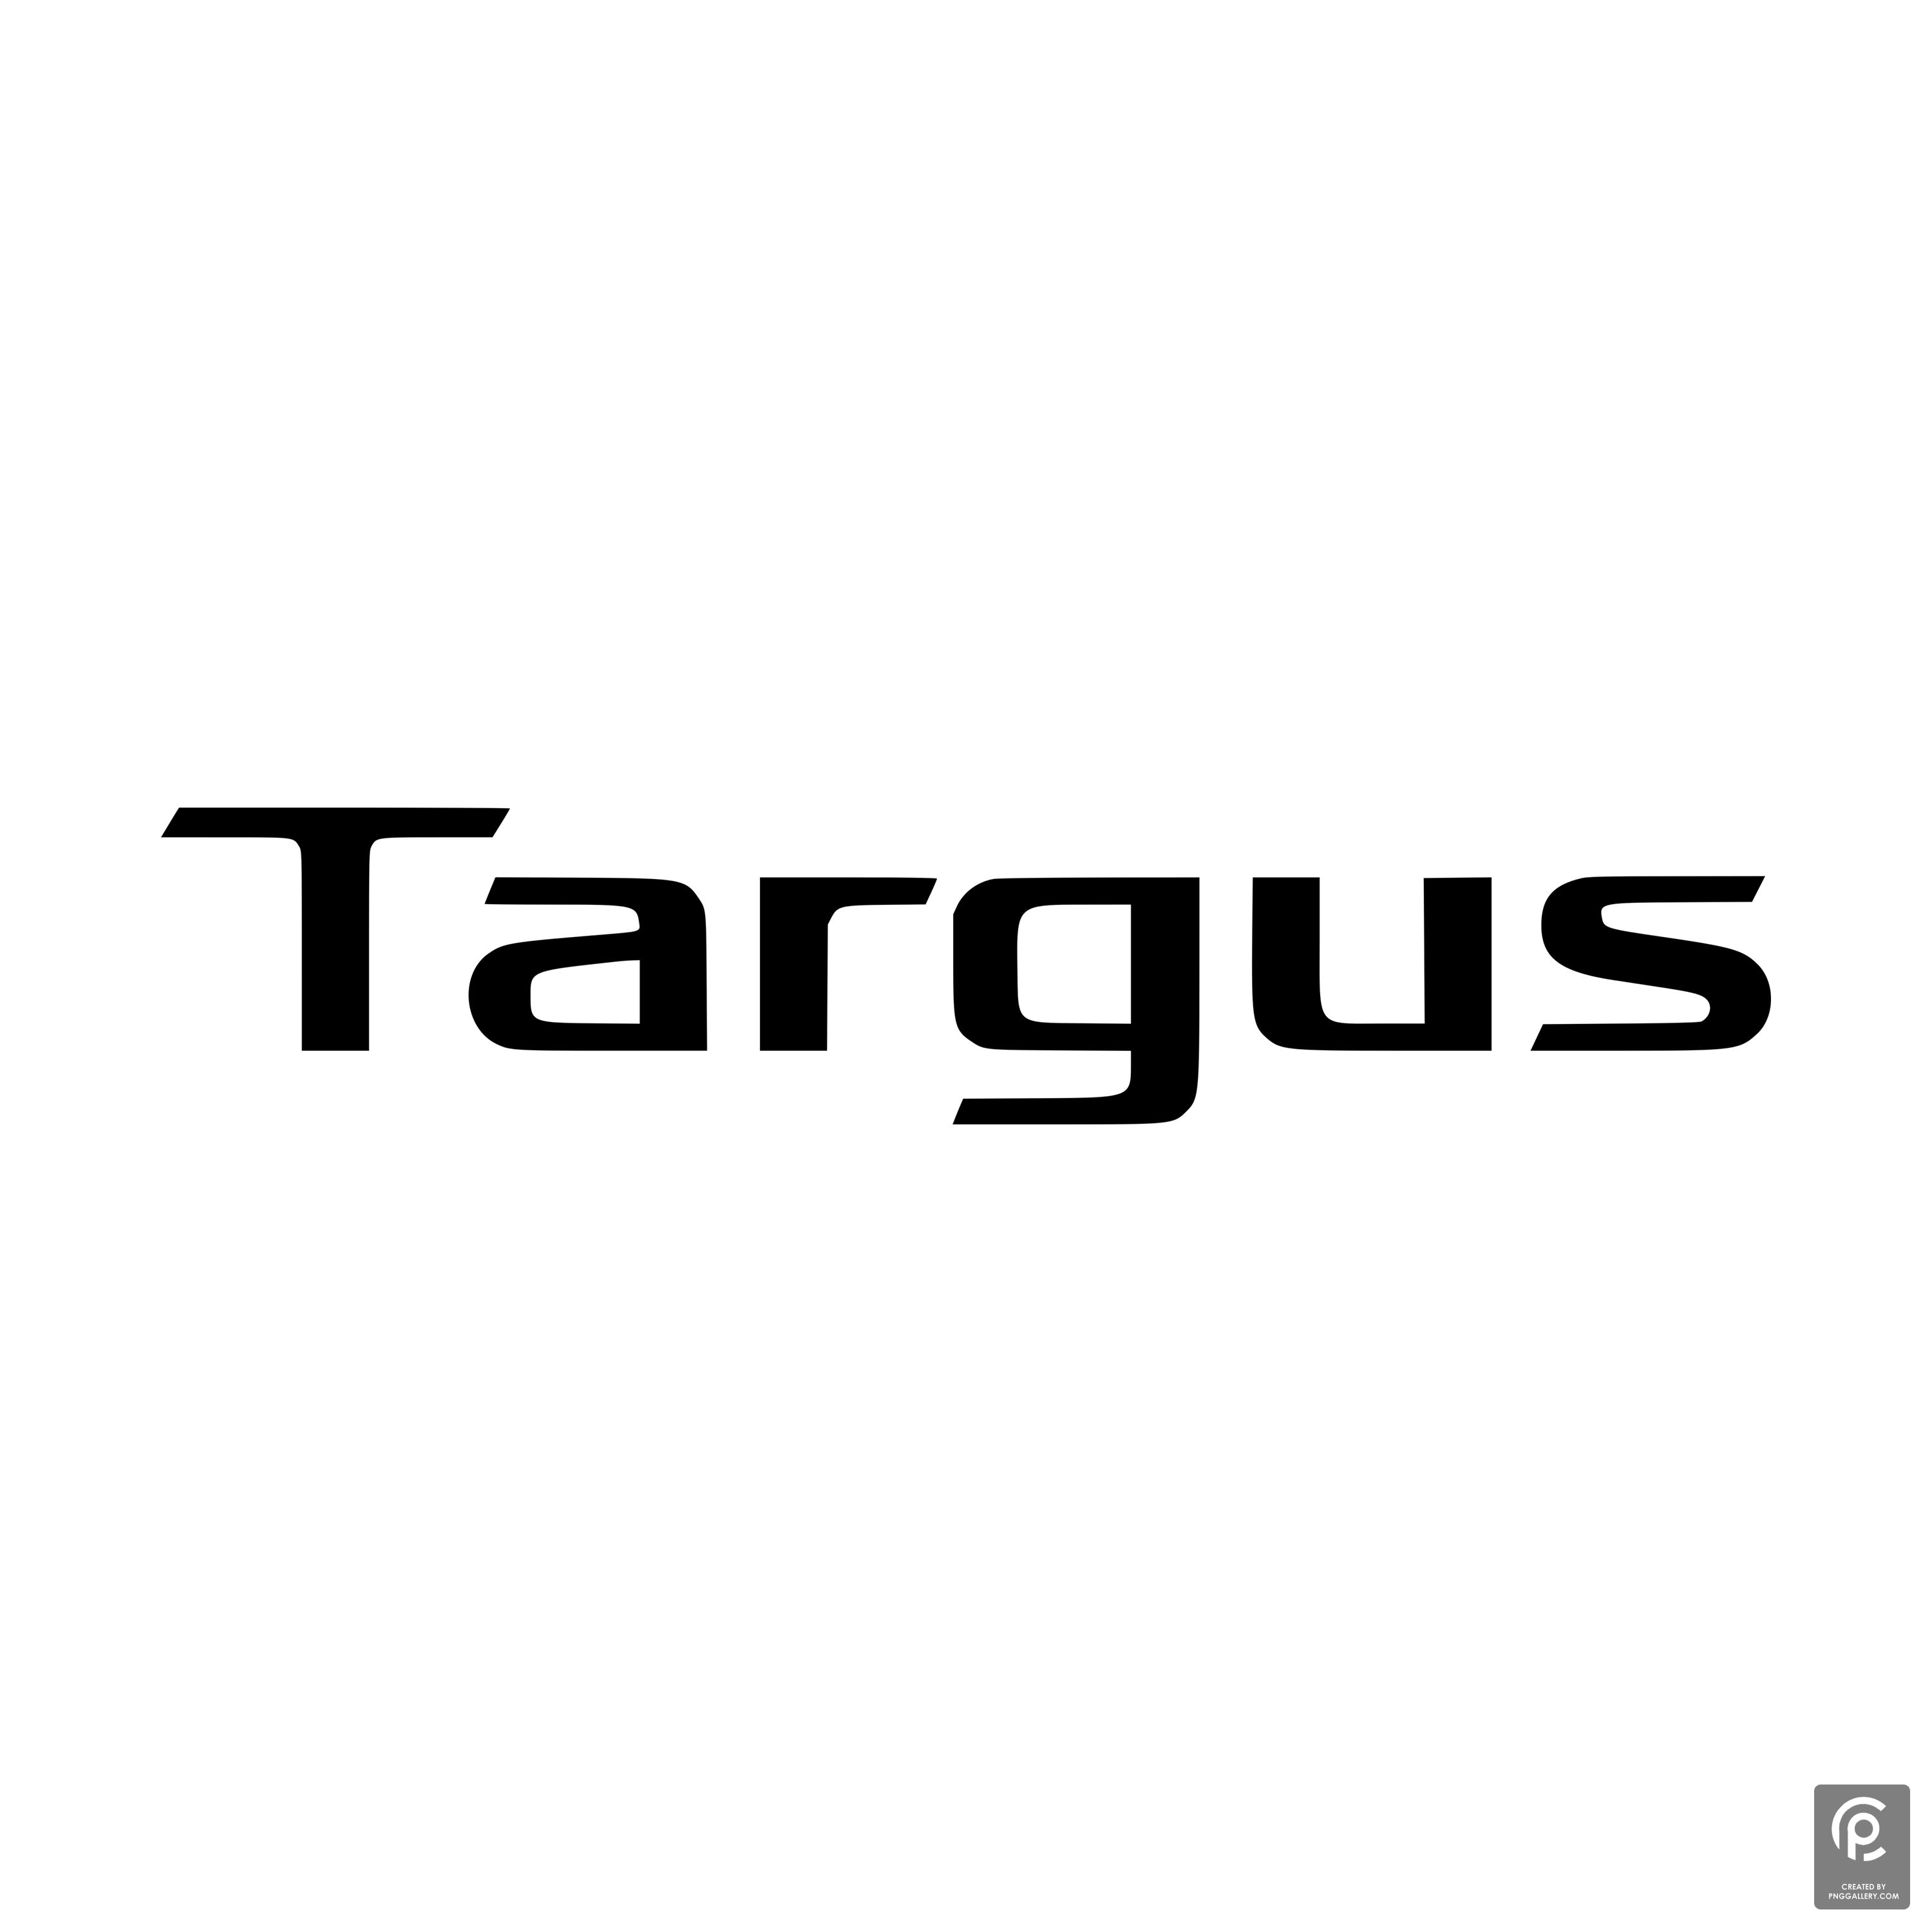 Targus Logo Transparent Gallery